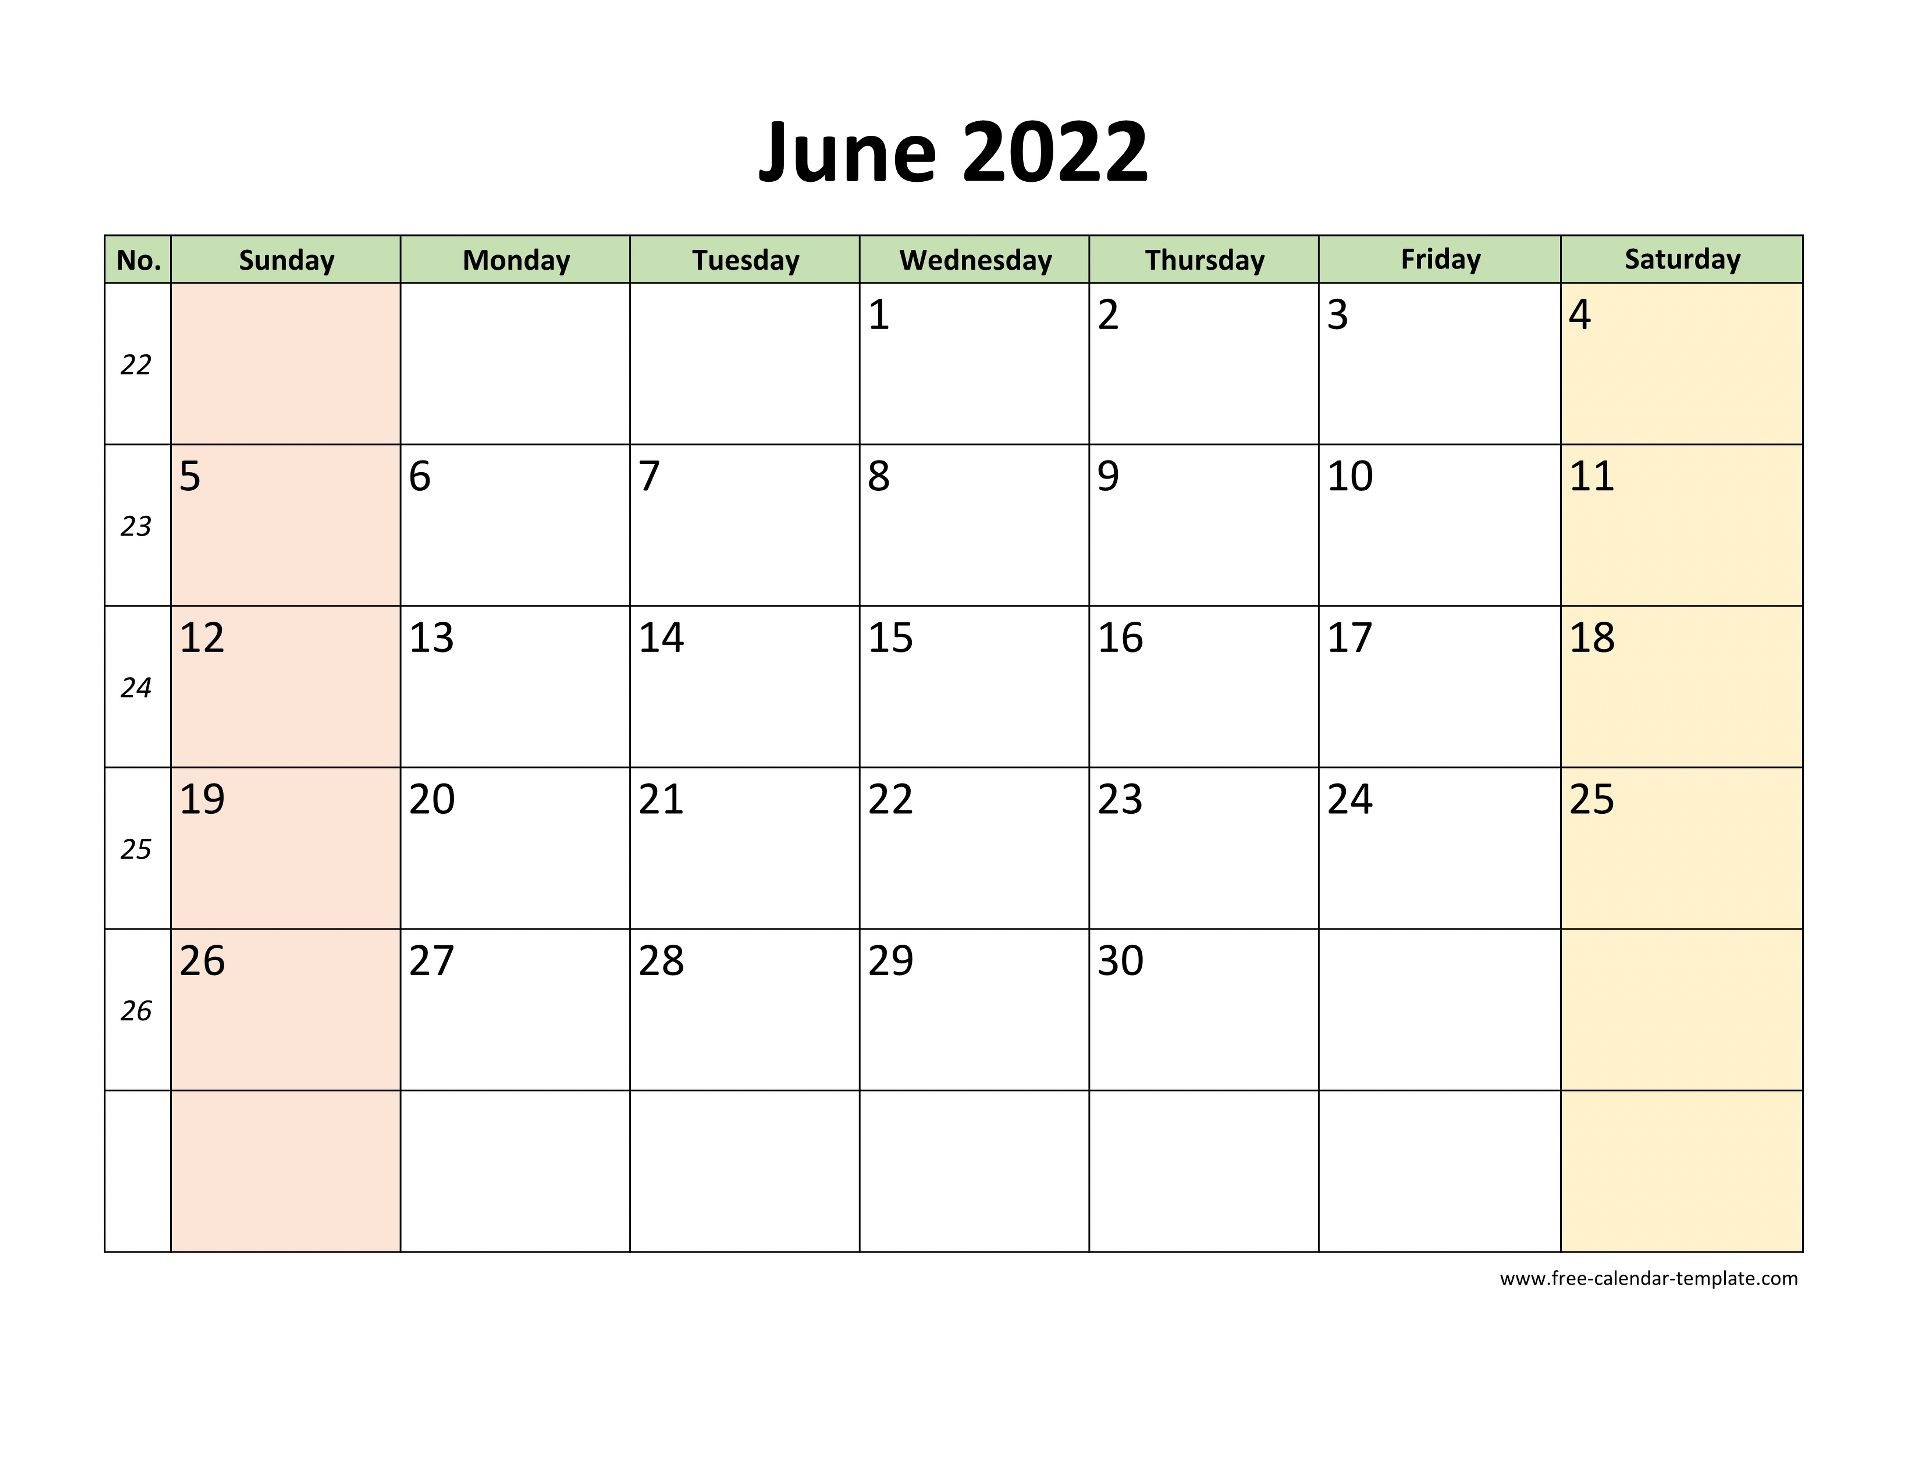 June 2022 Free Calendar Tempplate | Free-Calendar-Template  June 2022 Printable Calendar